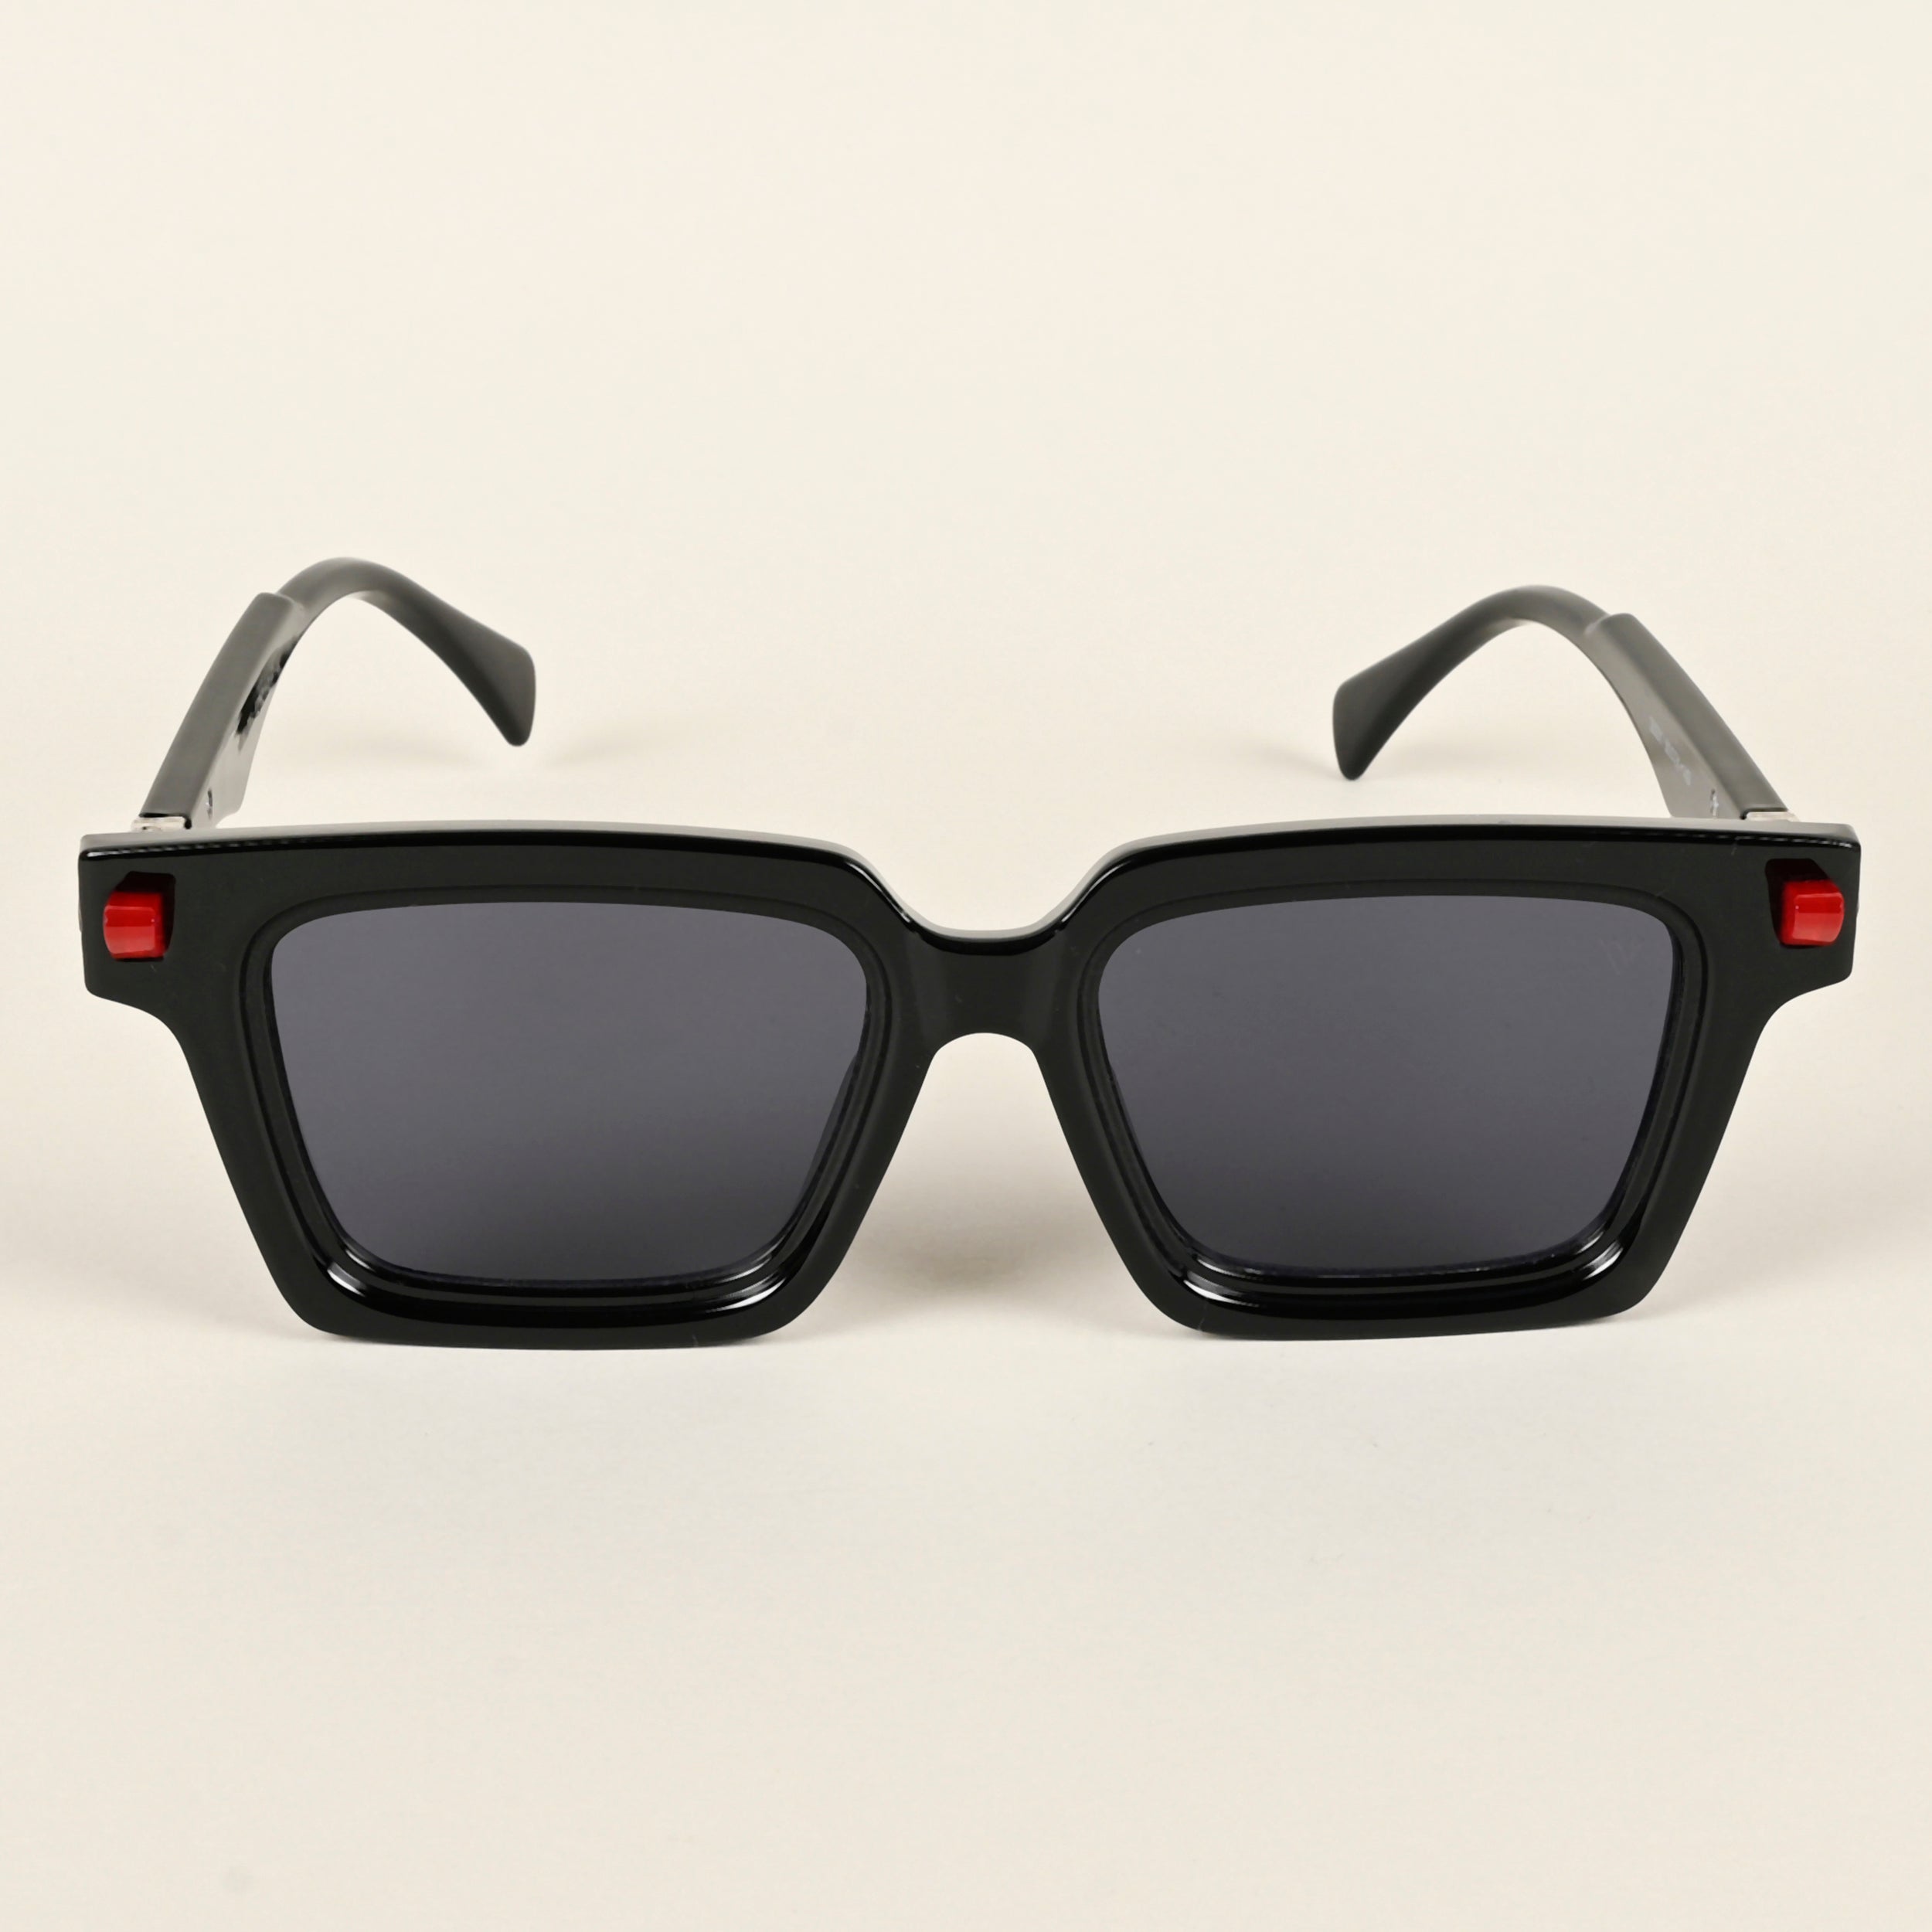 Voyage Shine Black Square Sunglasses for Men & Women - MG4875